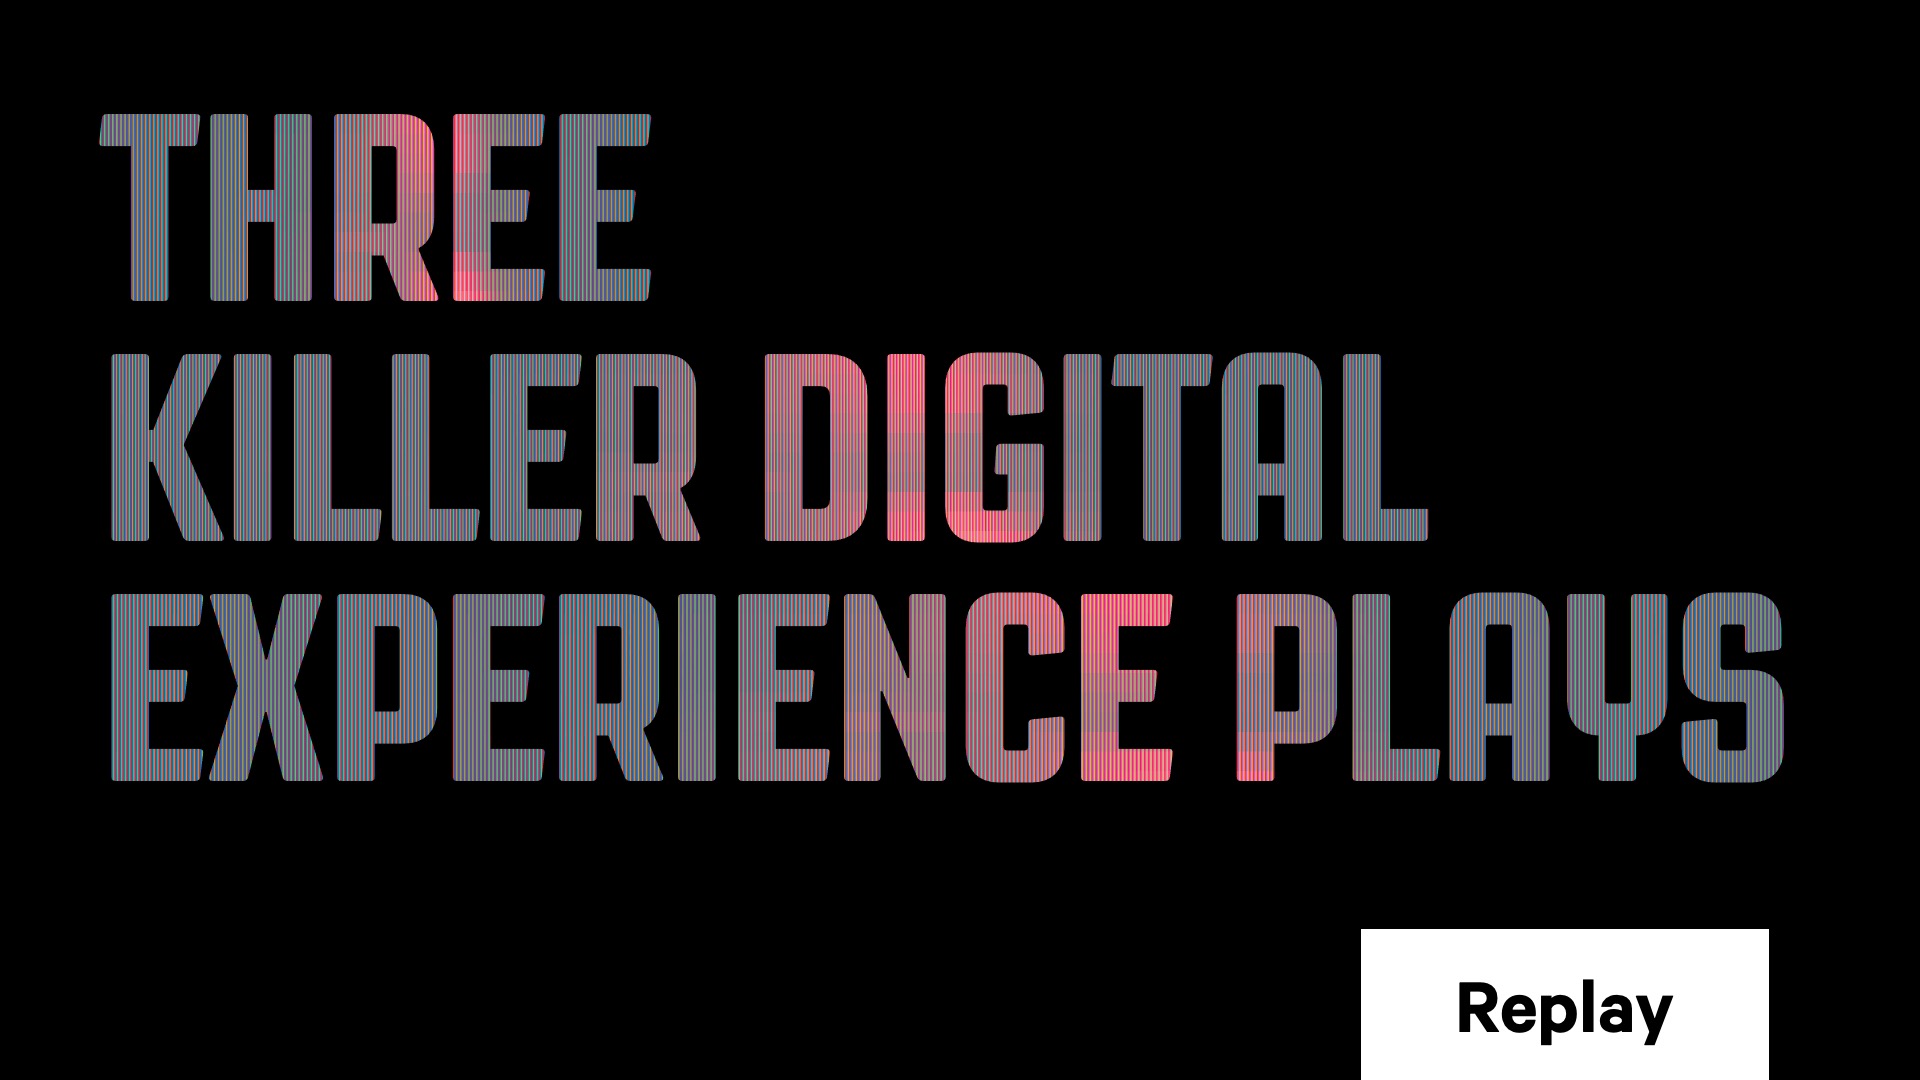 Three killer digital experience plays